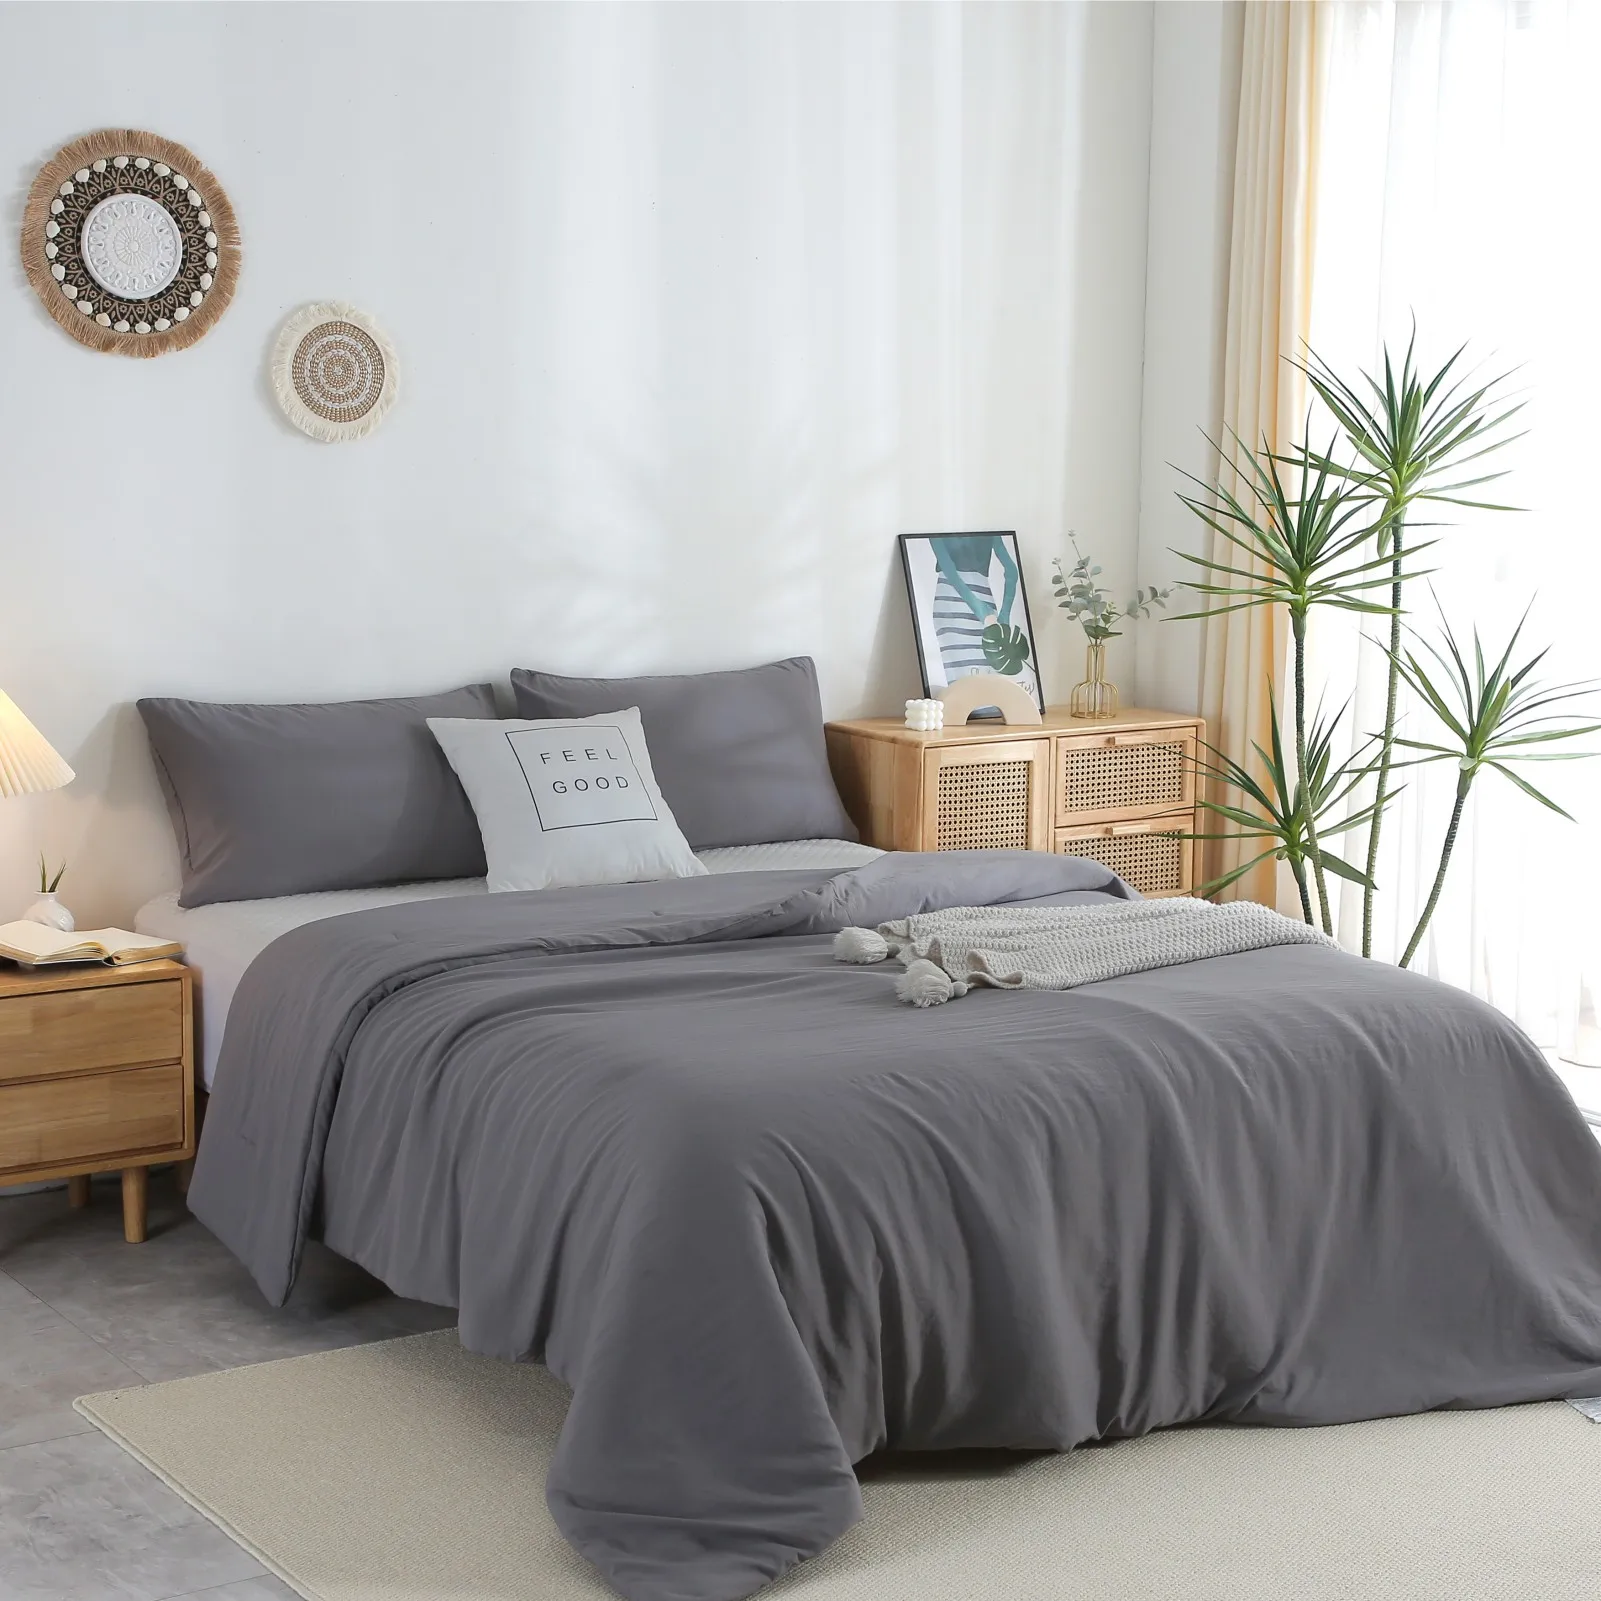 

Lightweight Fluffy Bedding Twin XL Set Comforter Down Duvet Cover Dark Gray Comfortable Bed Set with Pillow Sham